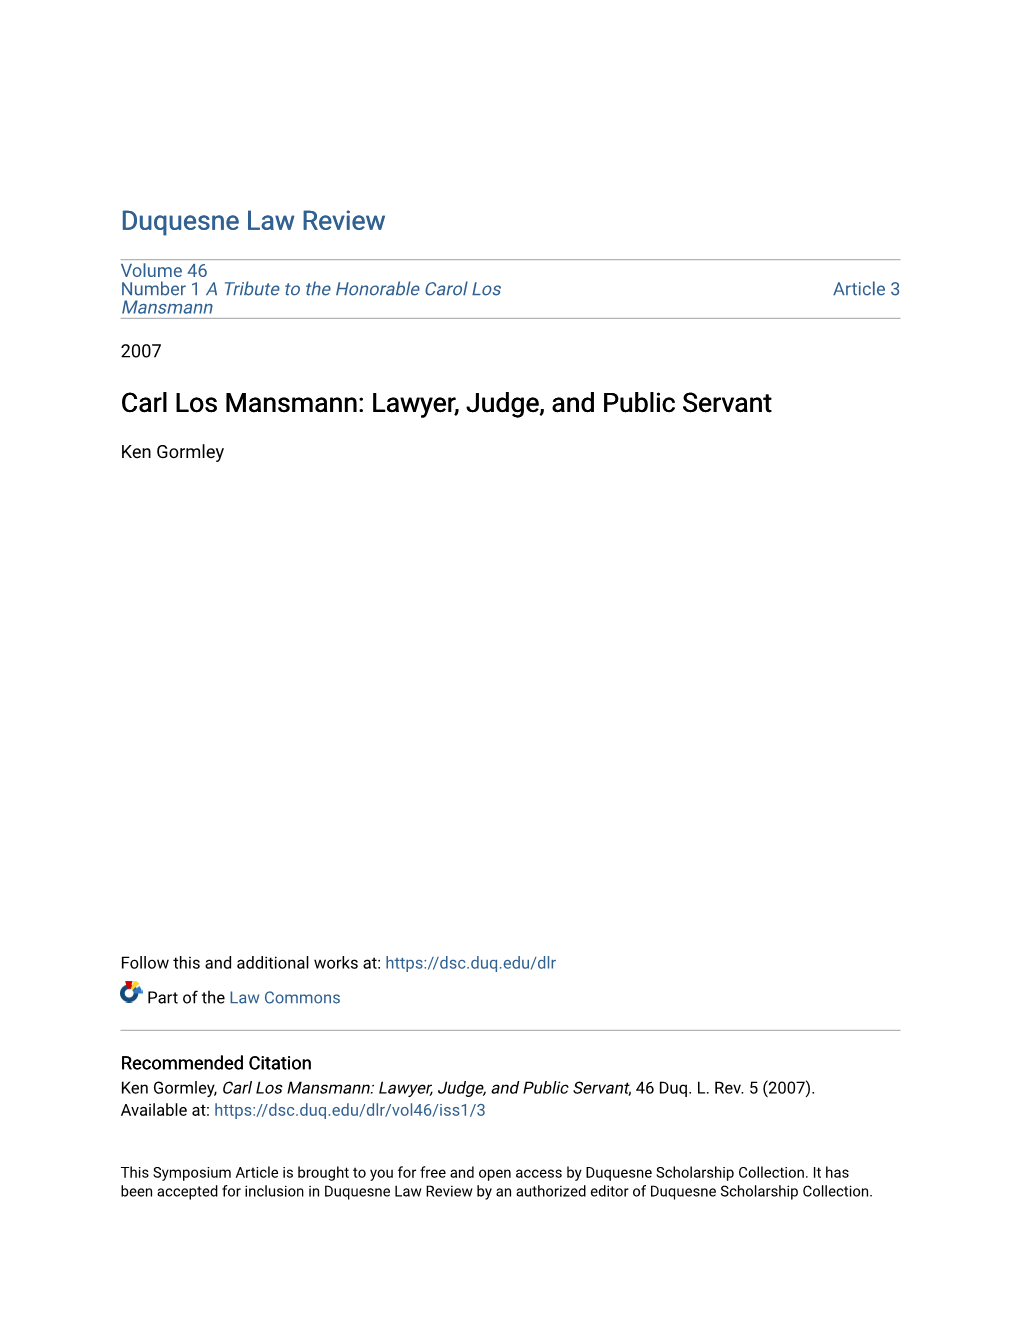 Carl Los Mansmann: Lawyer, Judge, and Public Servant